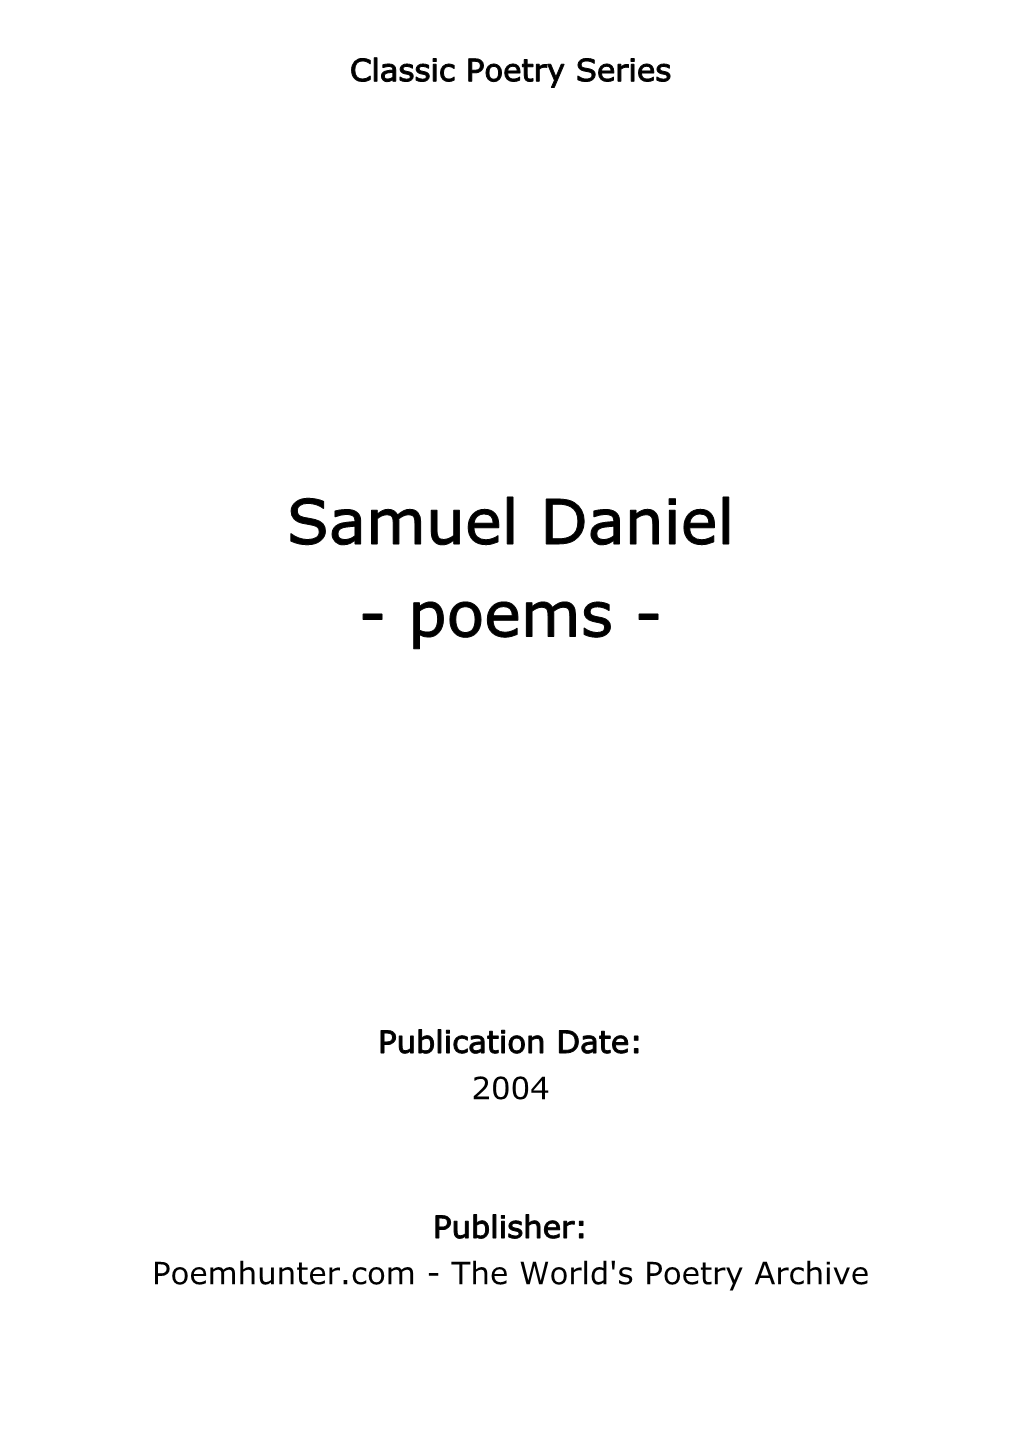 Samuel Daniel - Poems